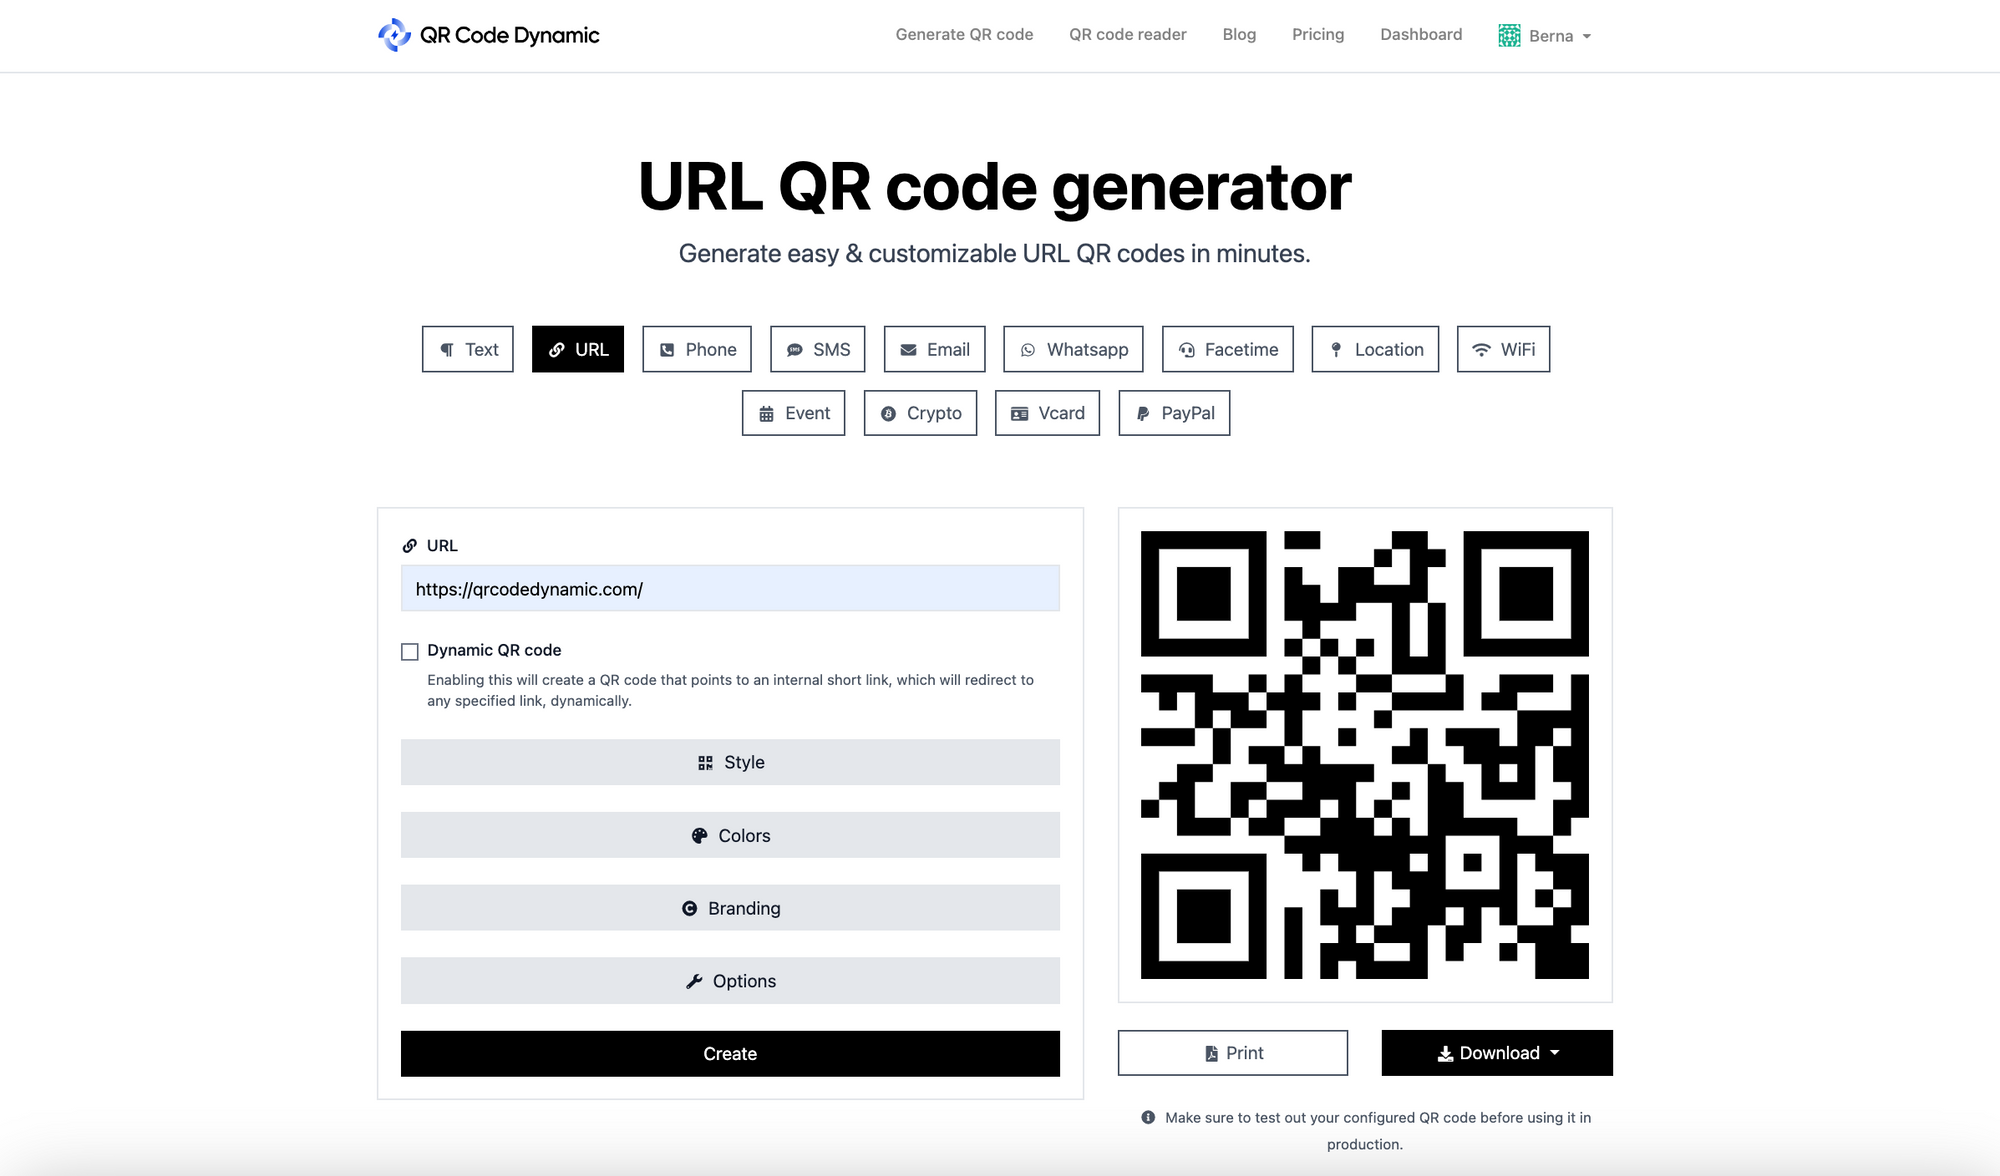 a screenshot of URL QR code generator landing page of QRCodeDynamic